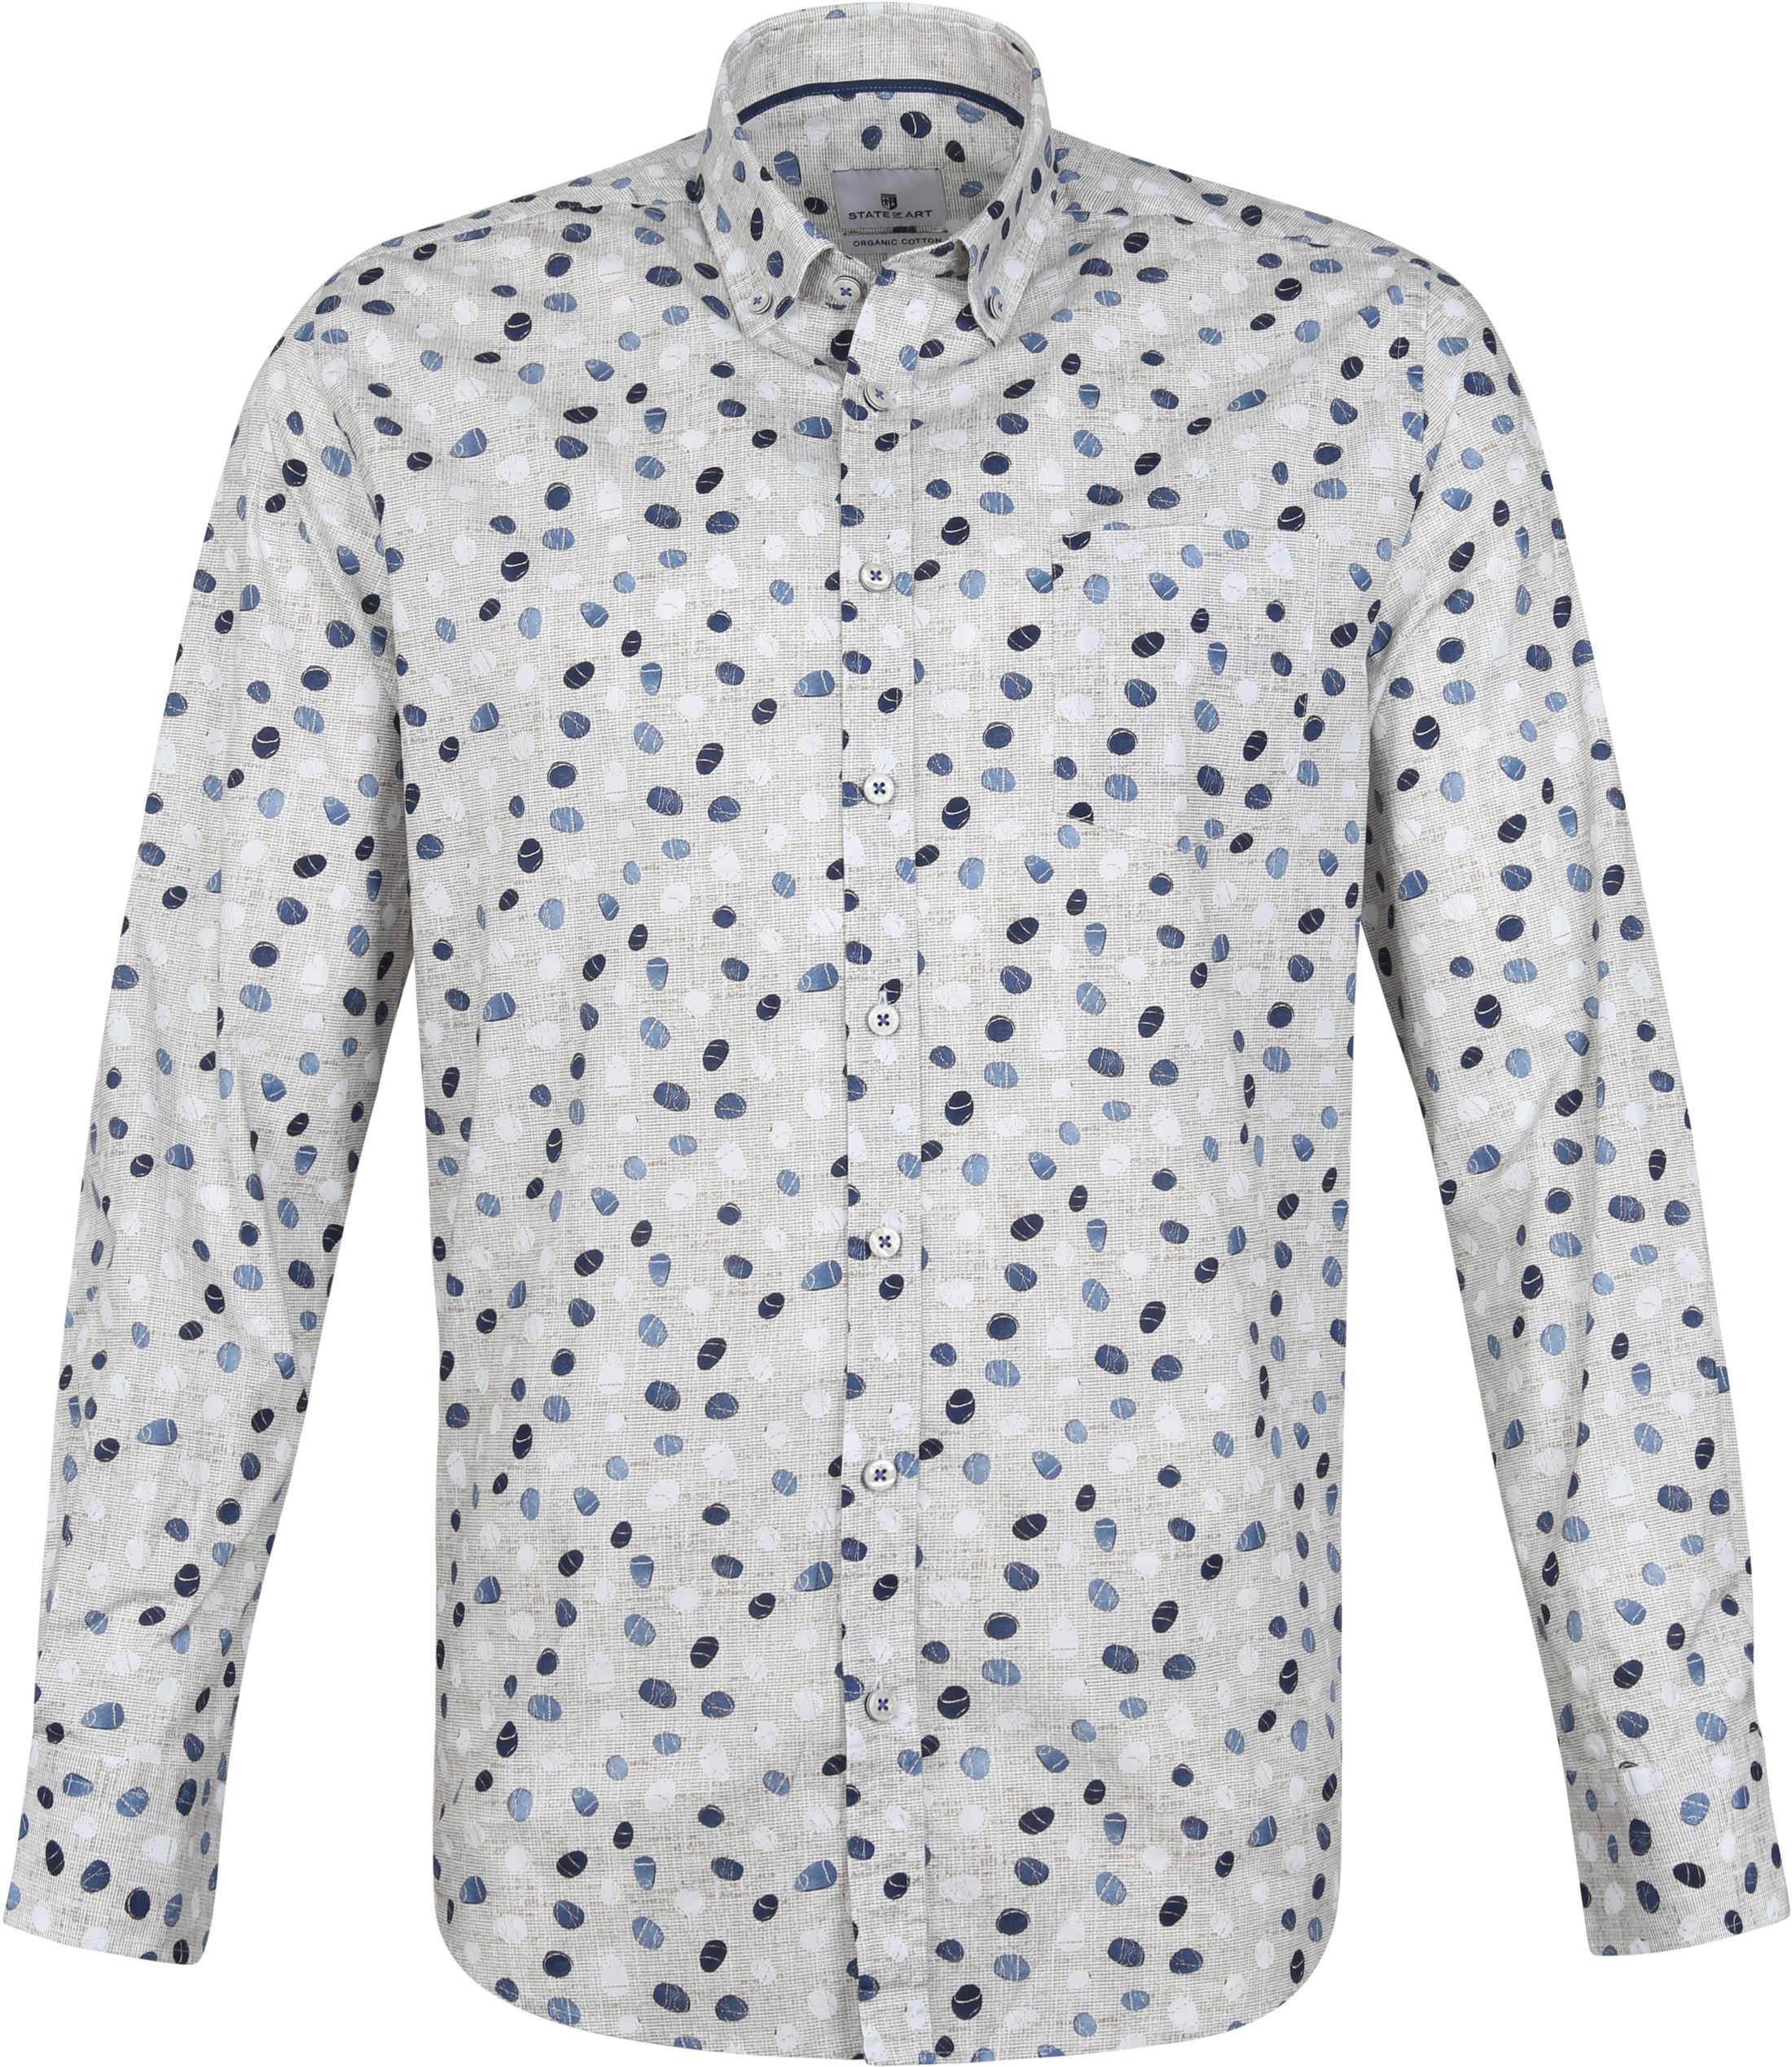 State Of Art Shirt Dots Grey Blue size L